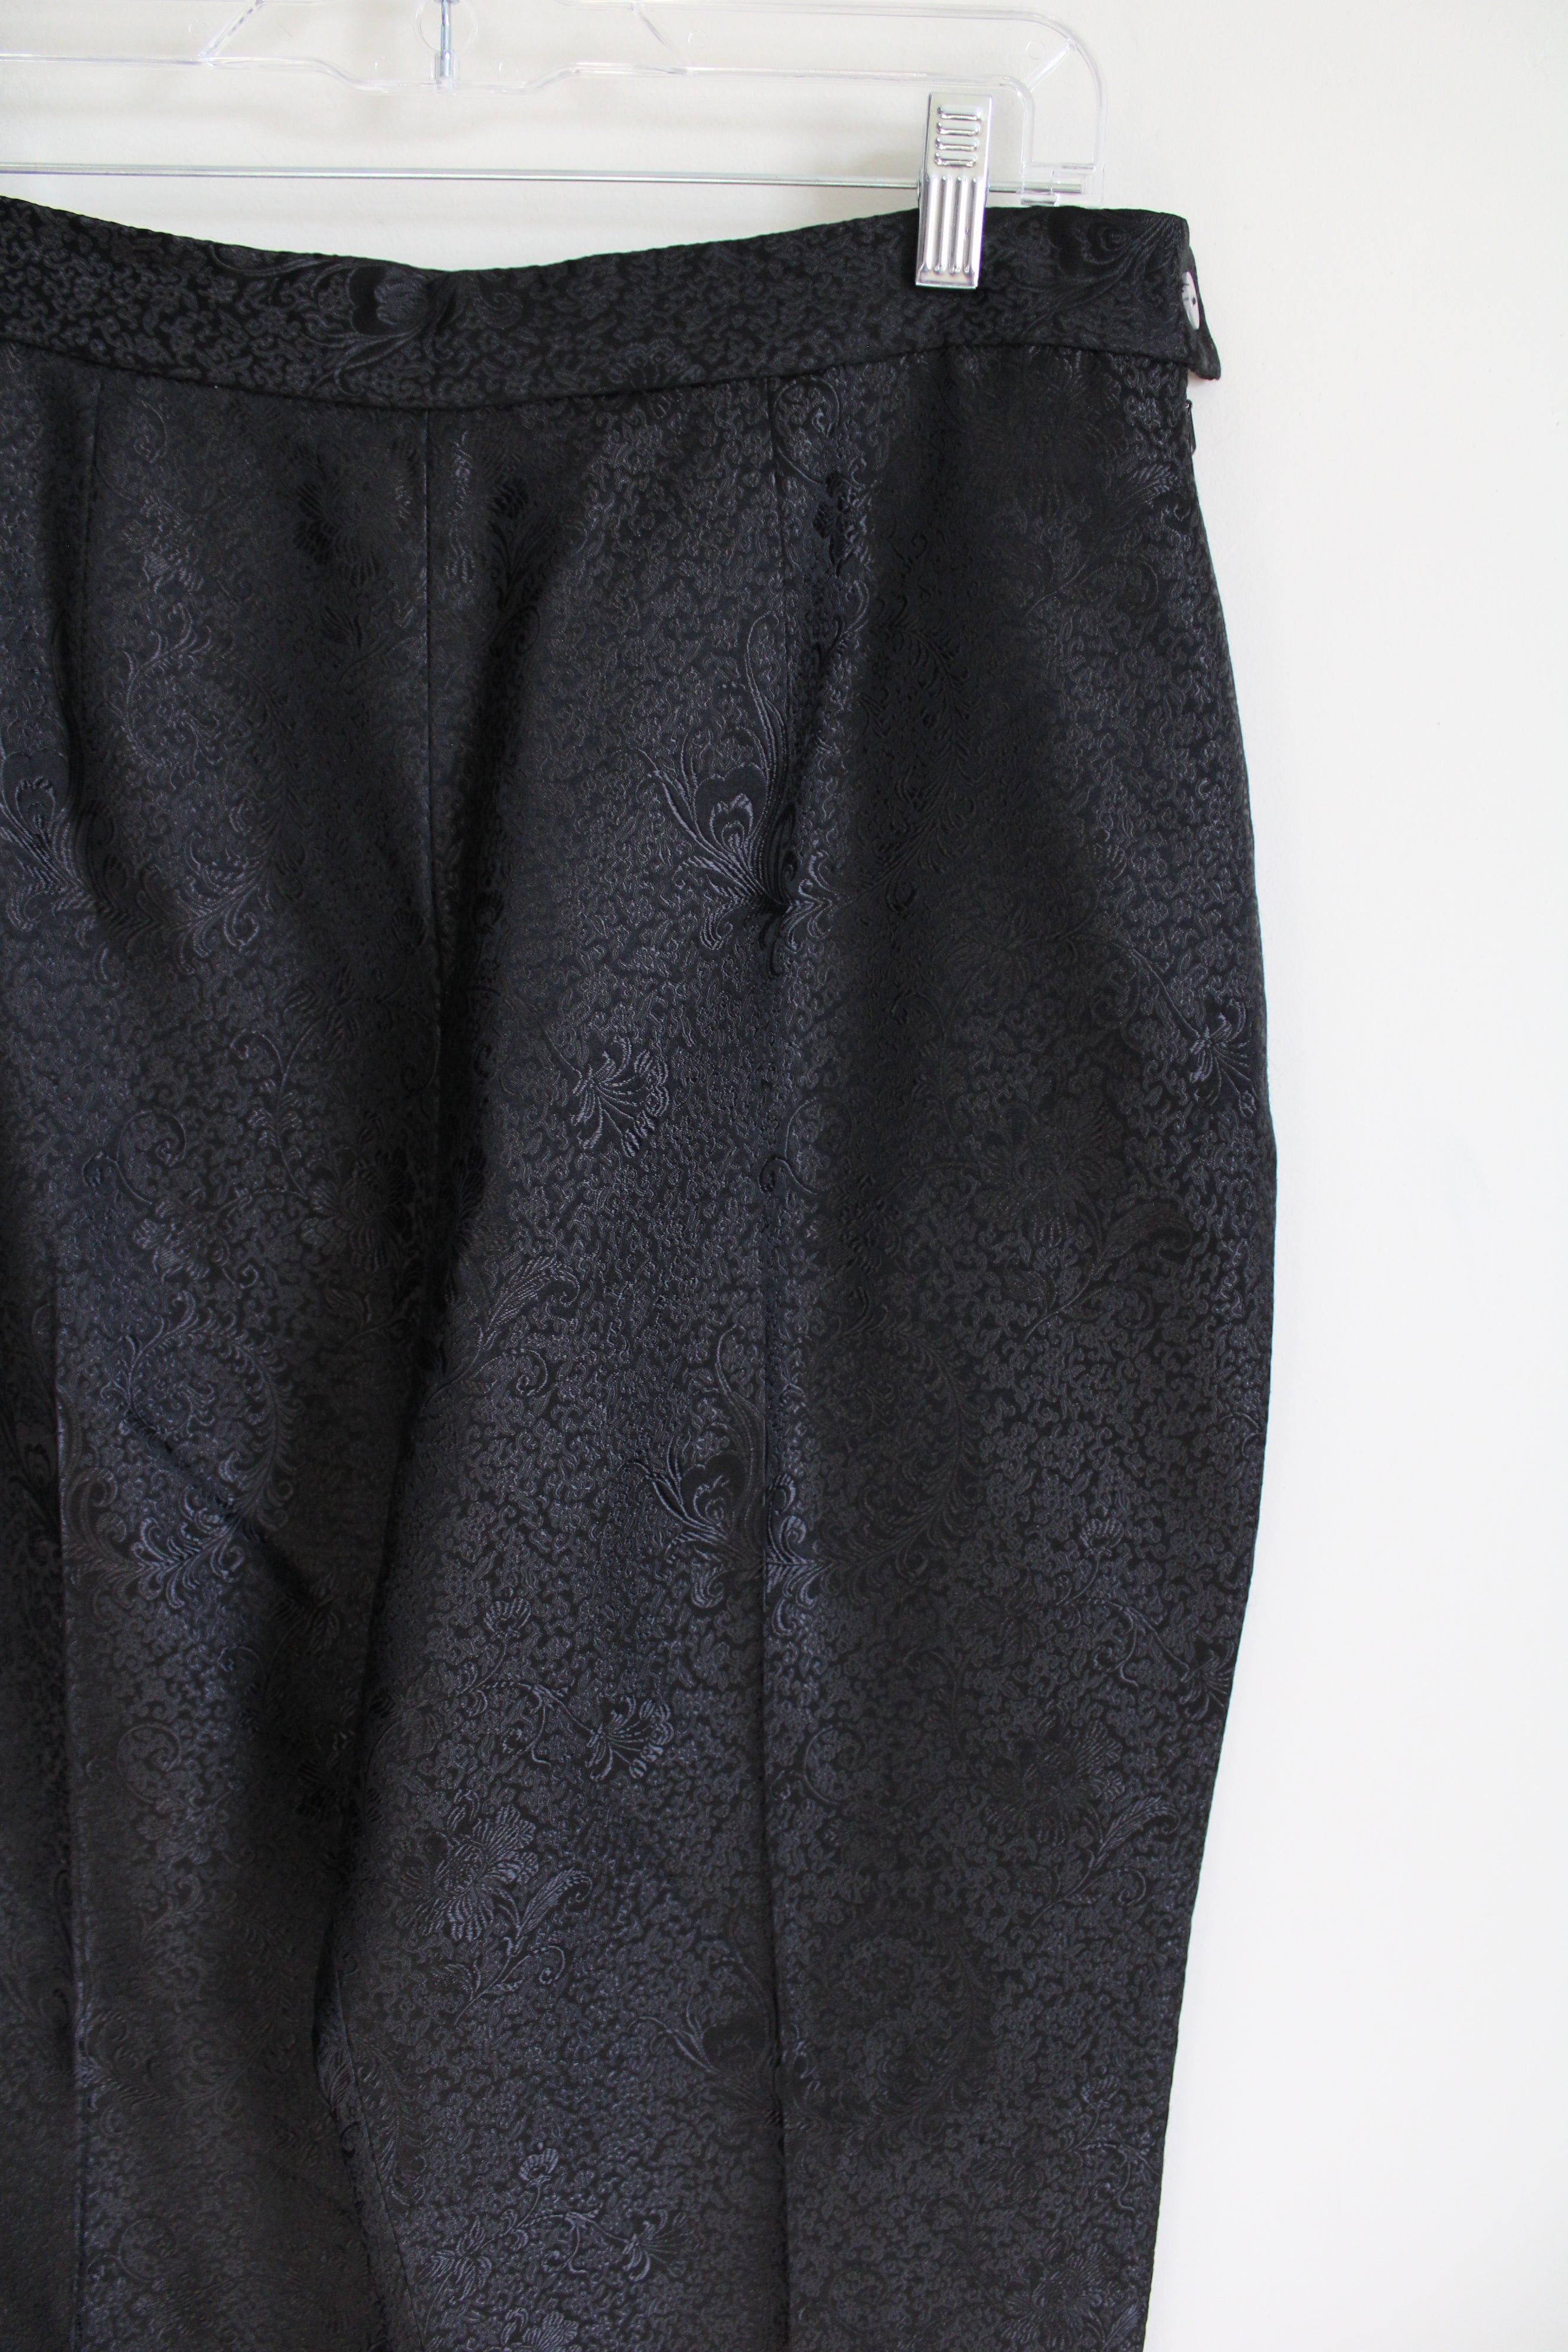 Rena Rowan Vintage Black Silk Blend Print Pant | 12